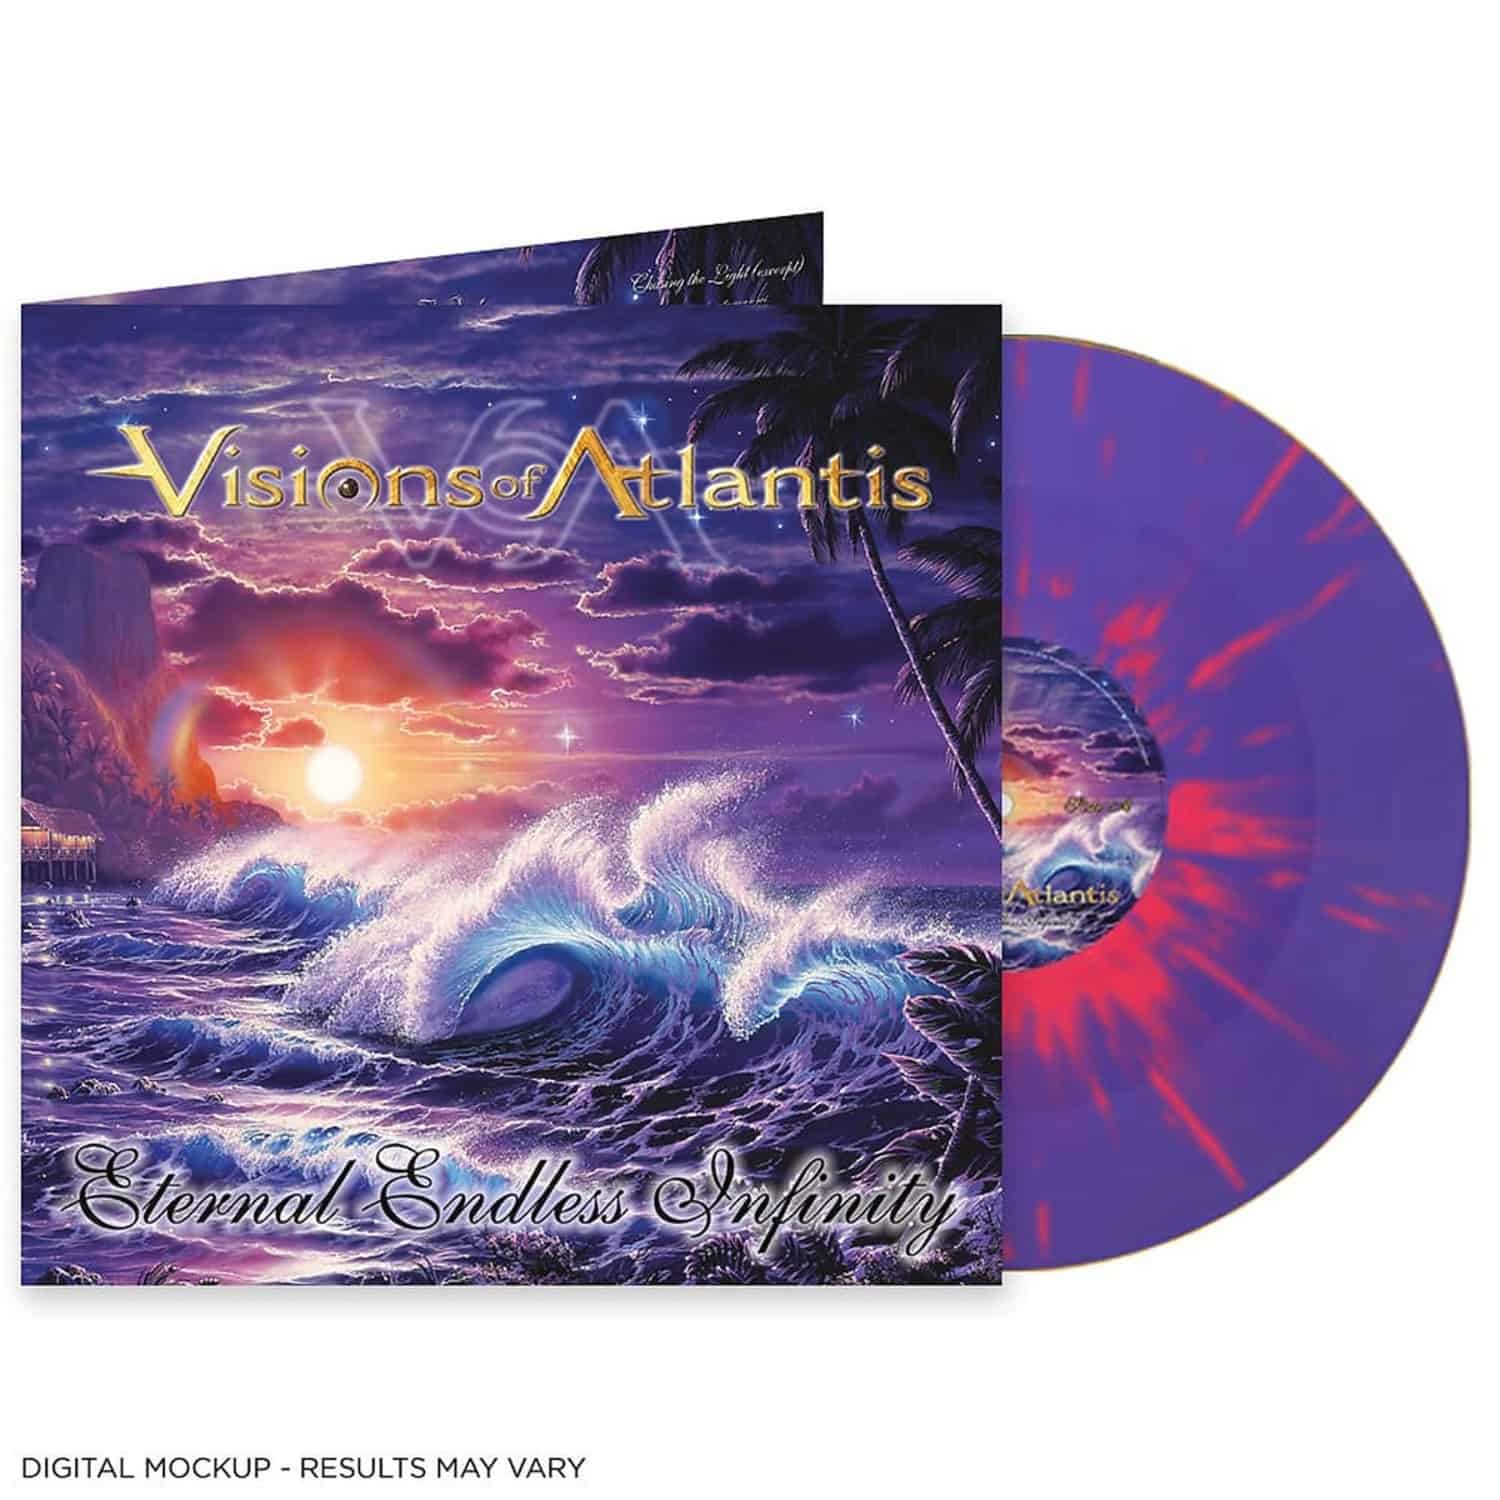 Visions of Atlantis - ETERNAL ENDLESS INFINITY 